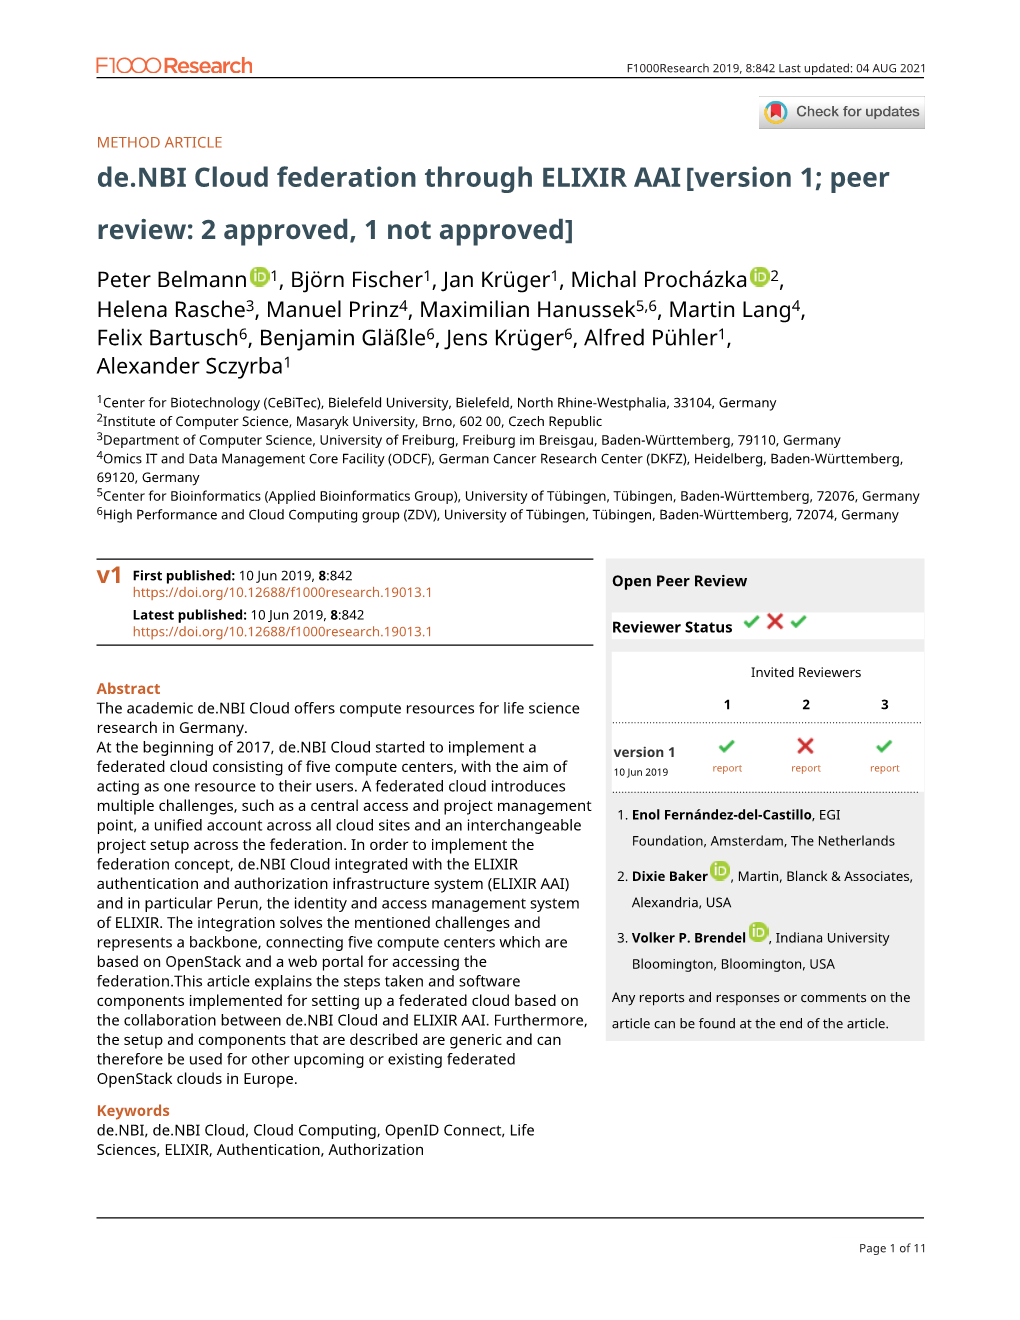 De.NBI Cloud Federation Through ELIXIR AAI[Version 1; Peer Review